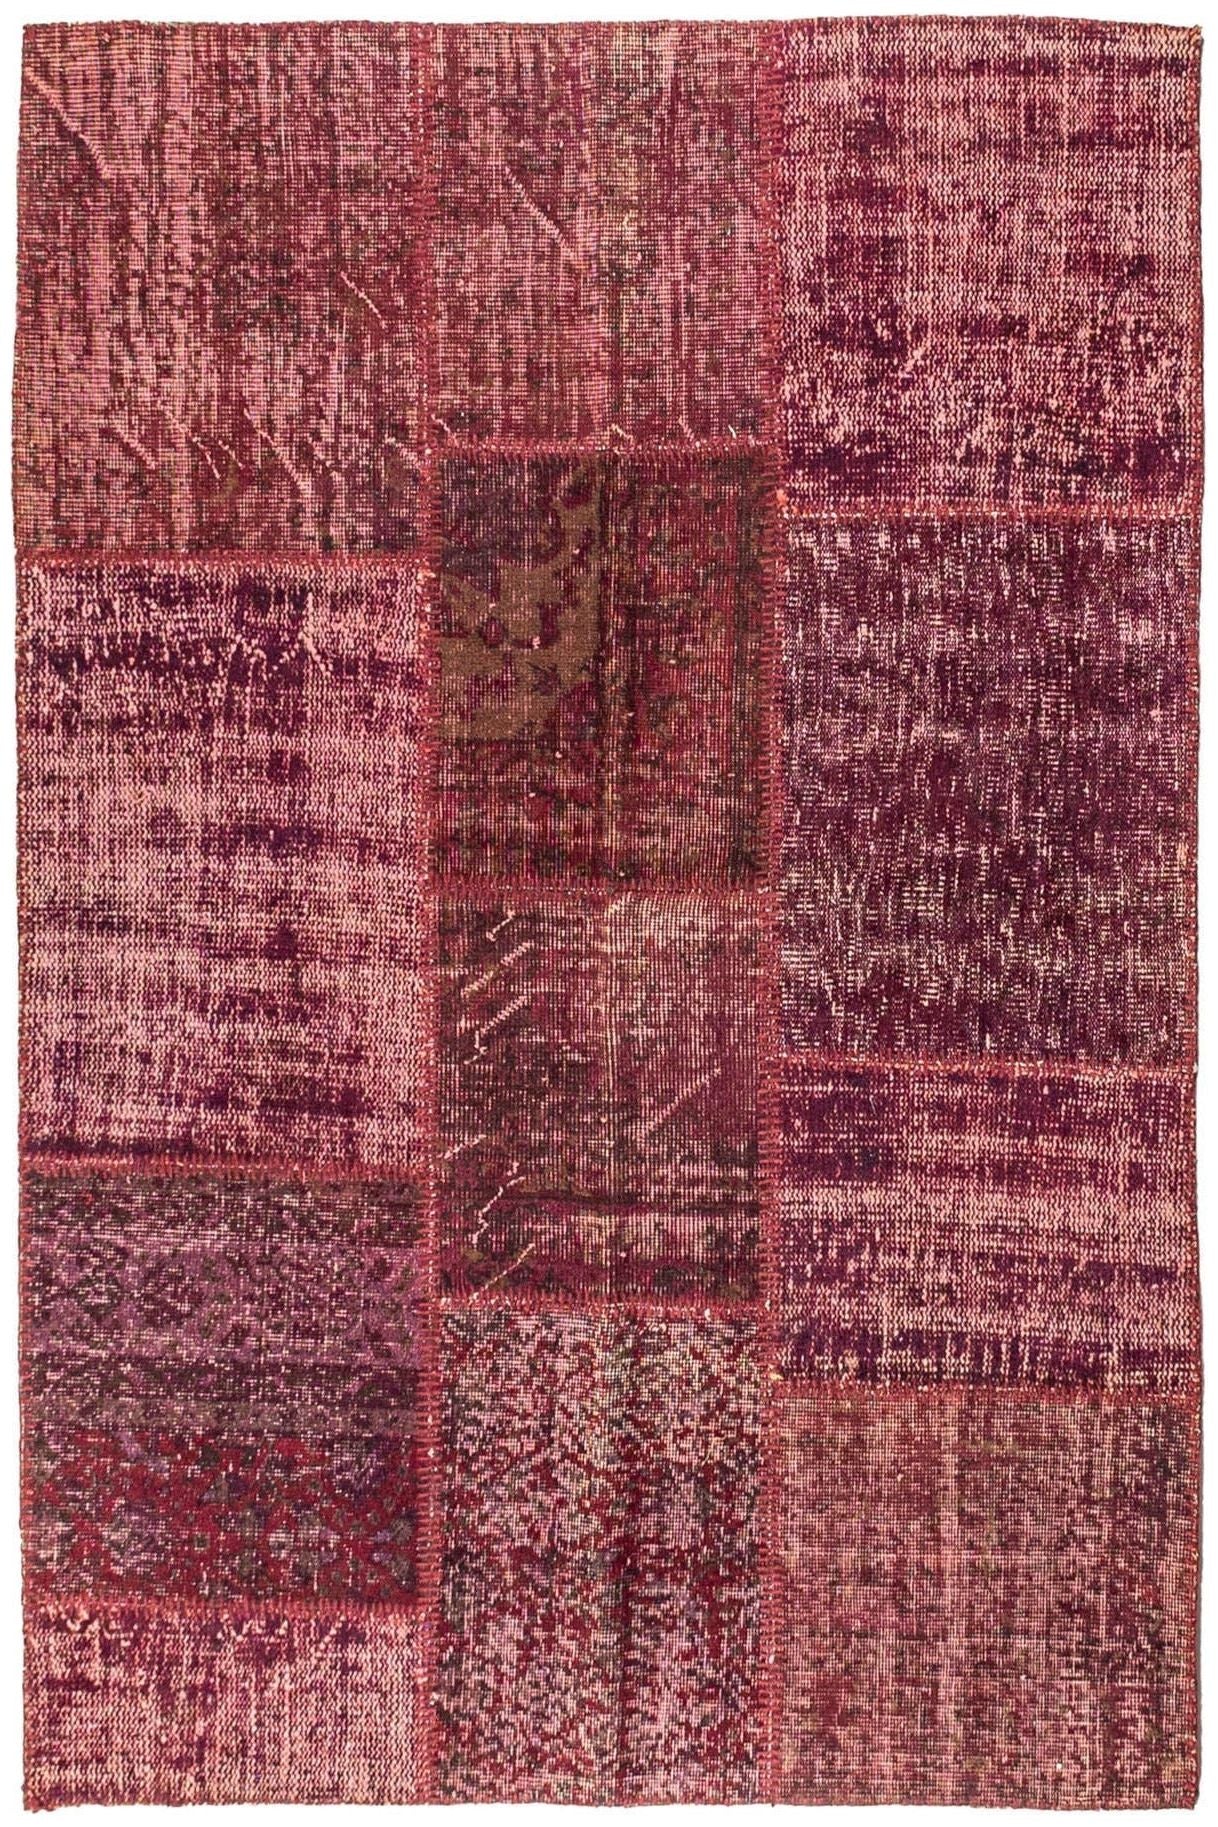 #Turkish_Carpets_Rugs# #Modern_Carpets# #Abrash_Carpets#Abrash-Turpa-071600146-140X200